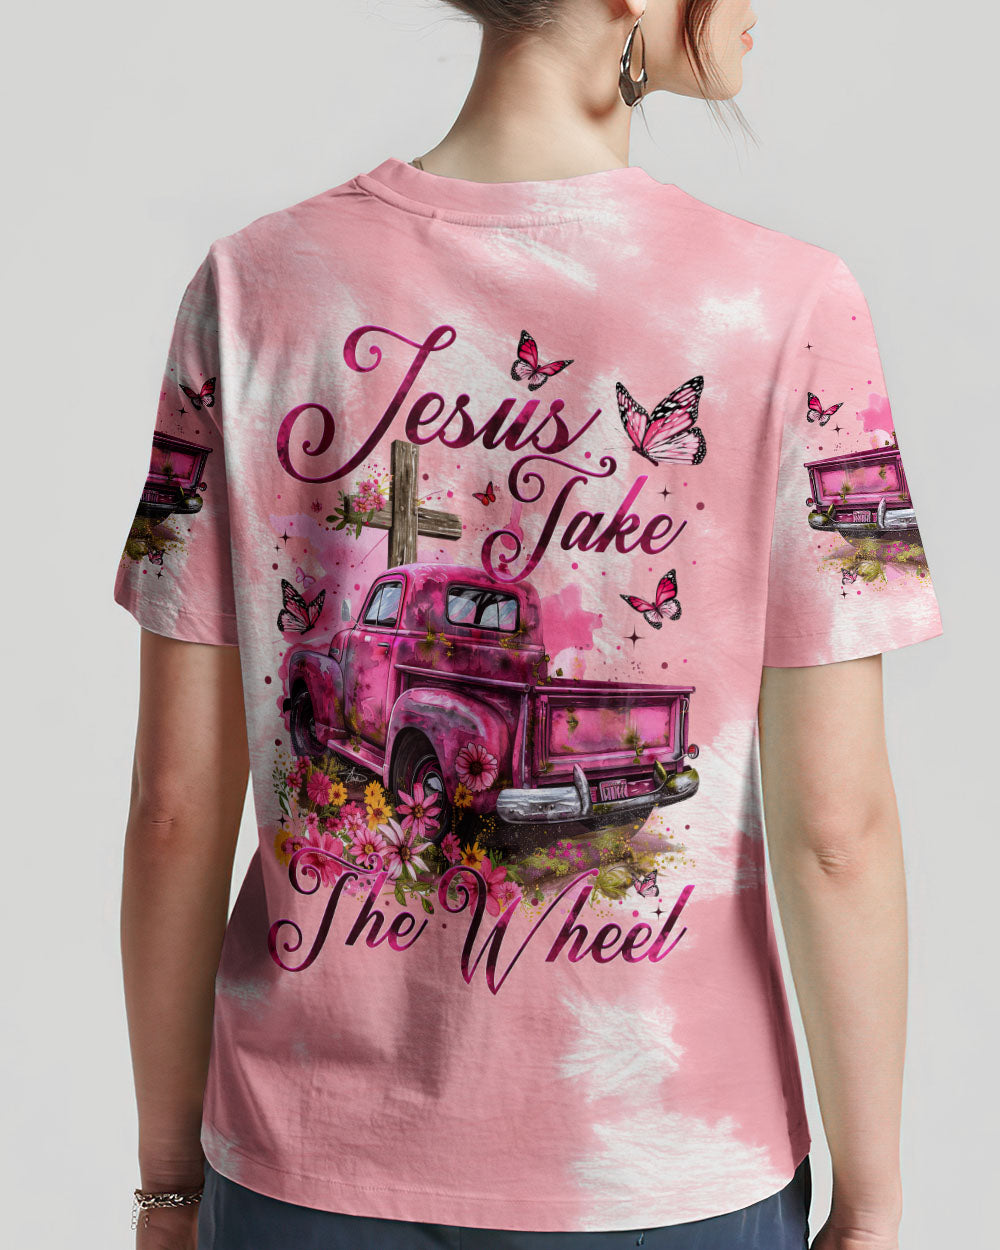 Jesus Take The Wheel Tie Dye Women's All Over Print Shirt - Tytm2902242